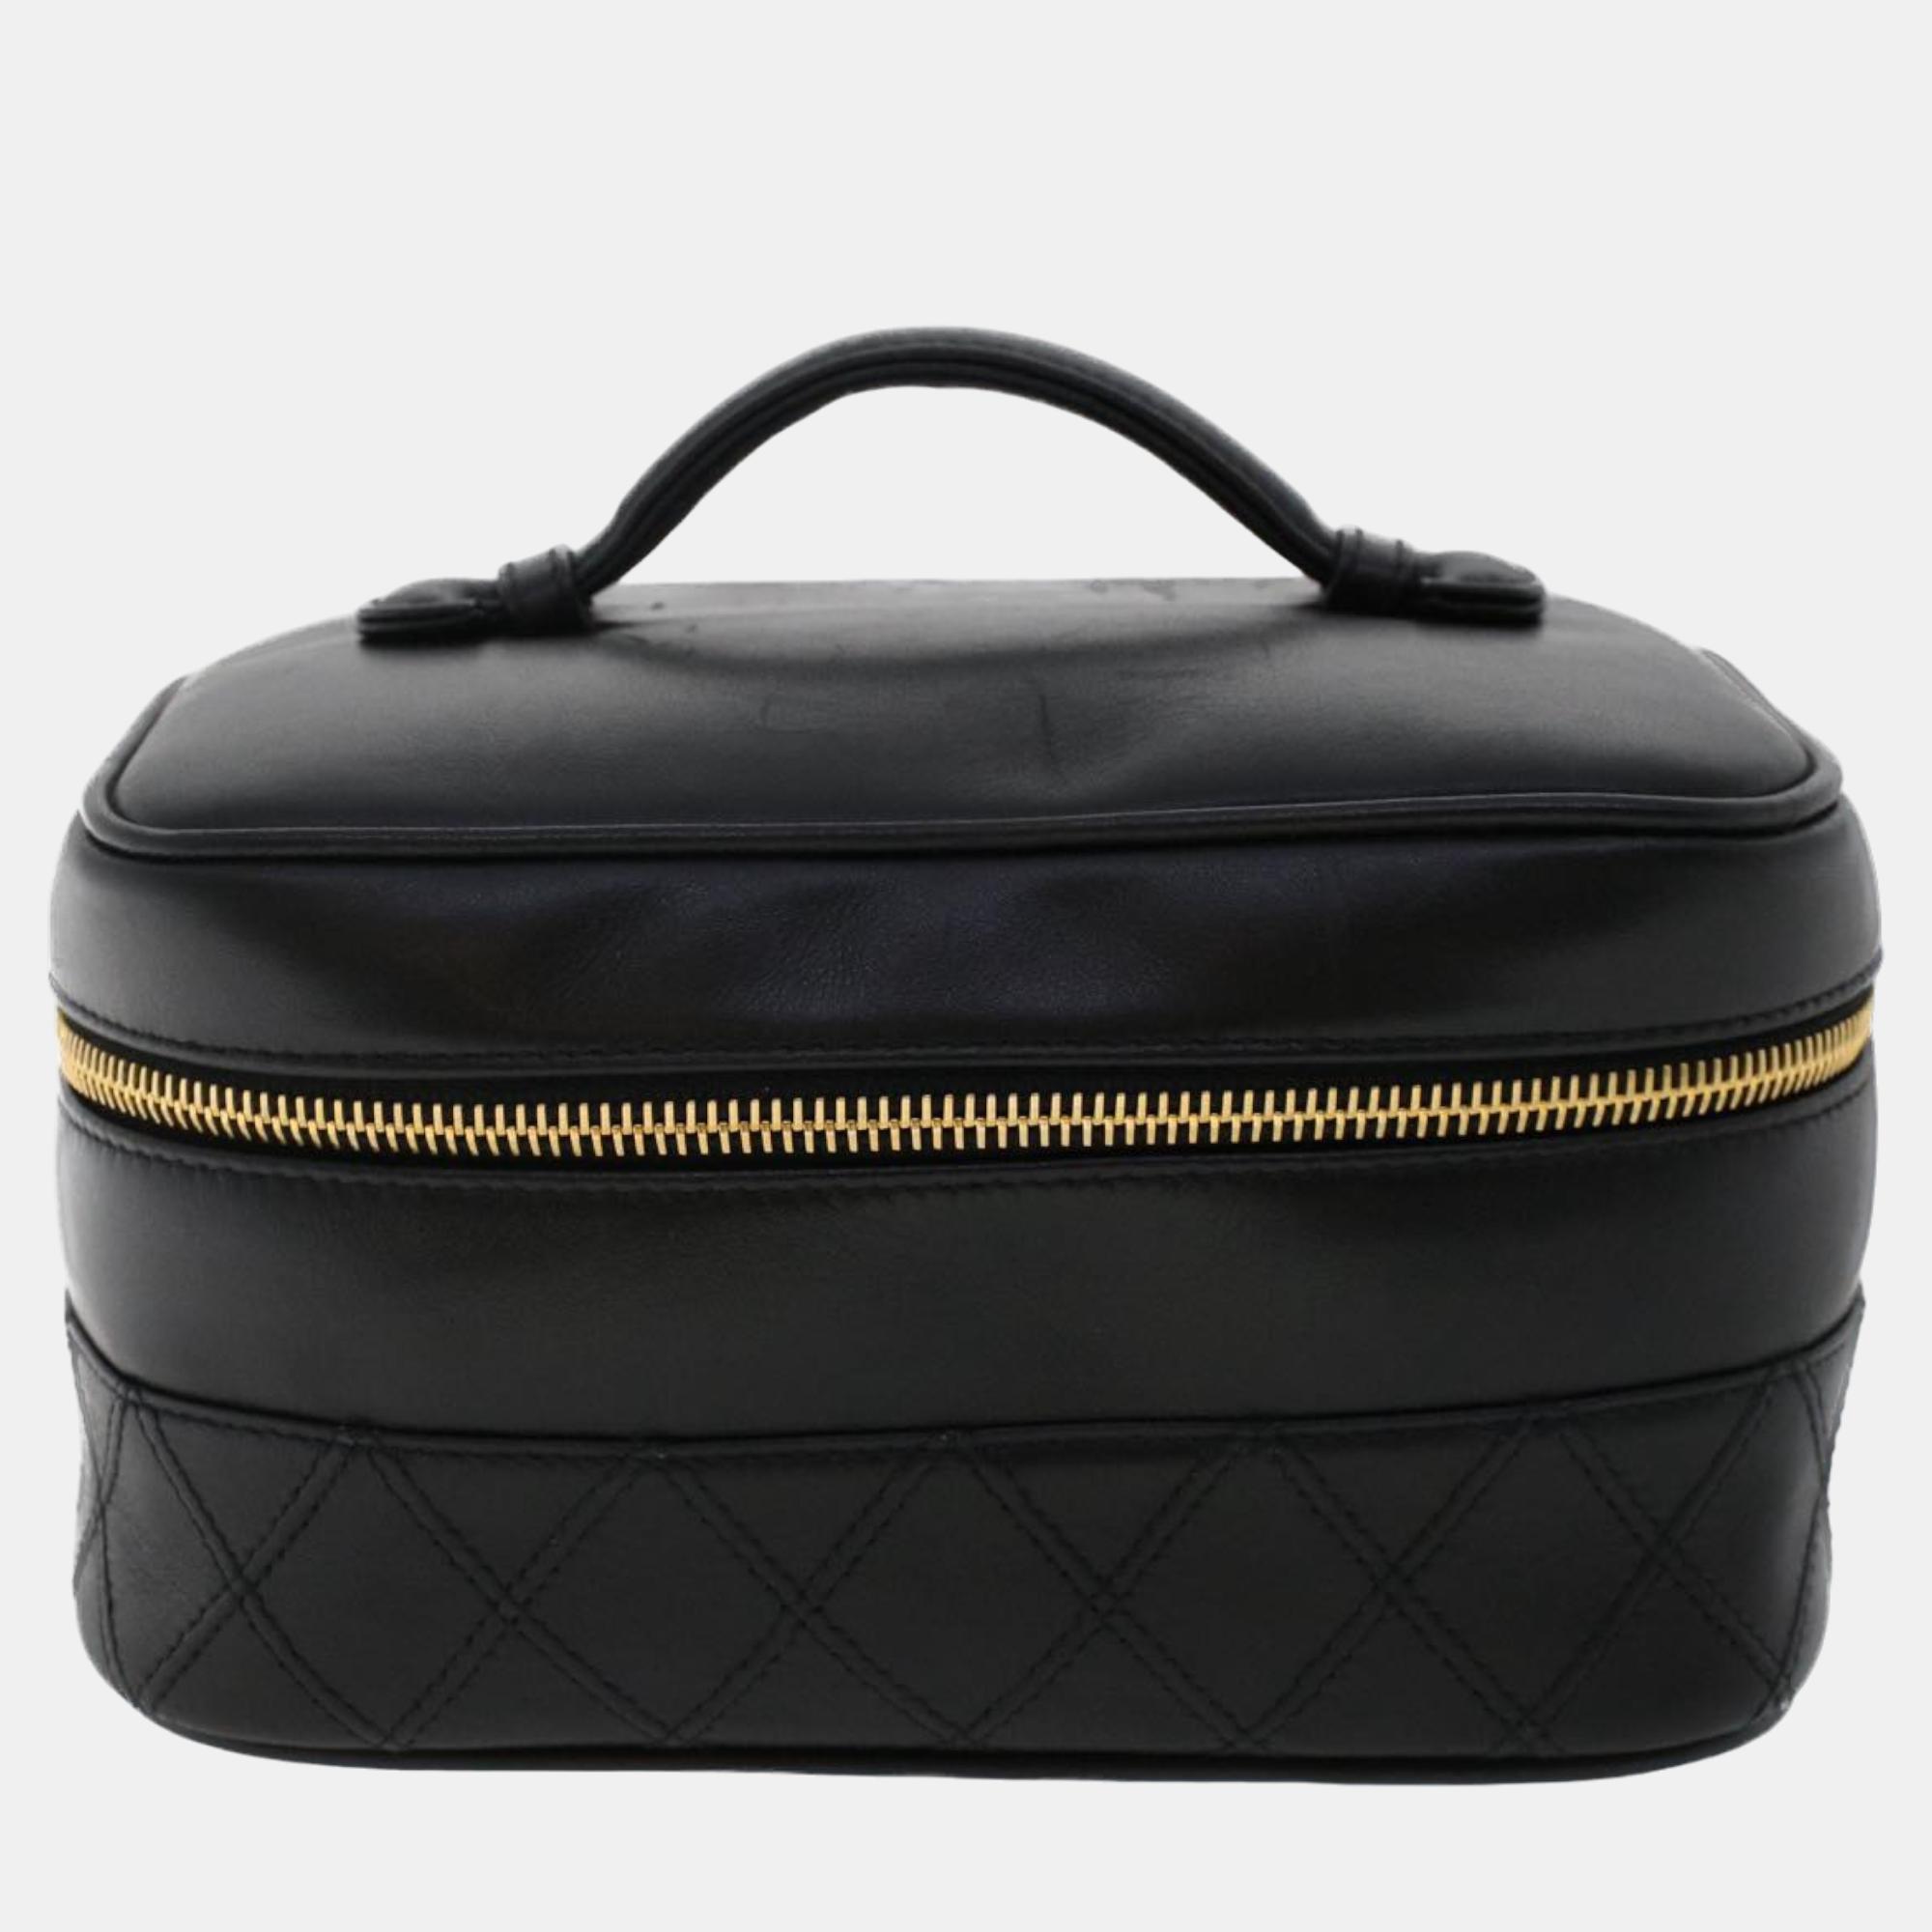 Chanel black leather cc vanity case